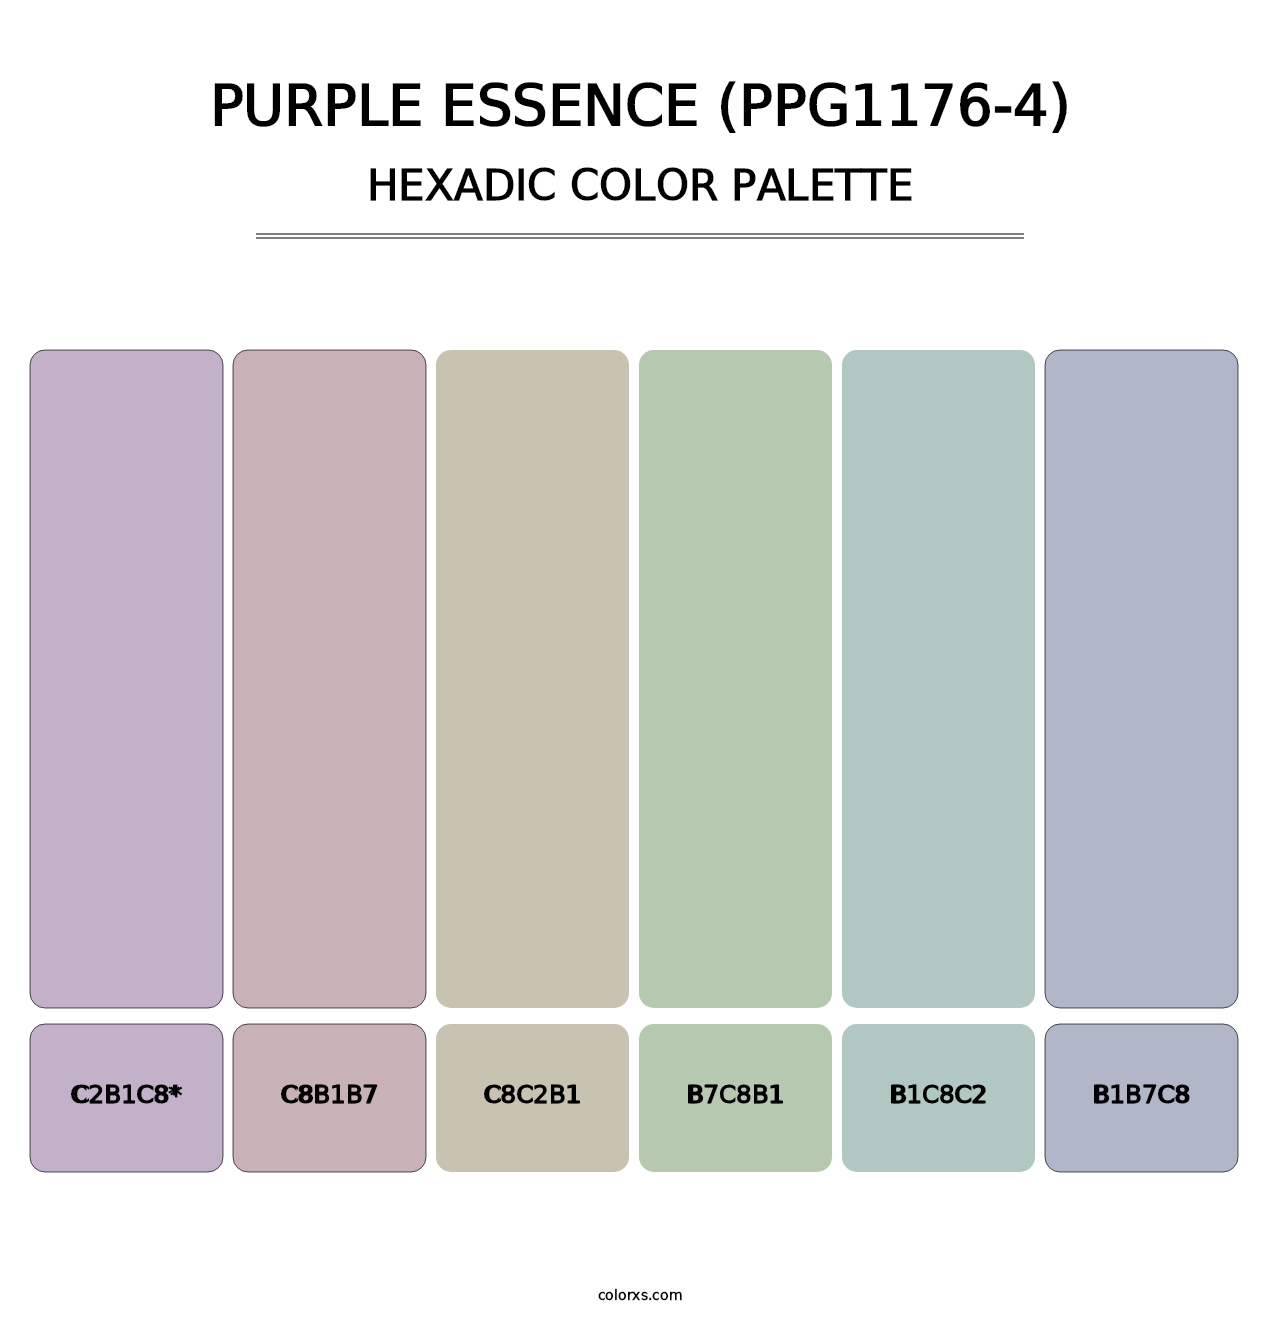 Purple Essence (PPG1176-4) - Hexadic Color Palette